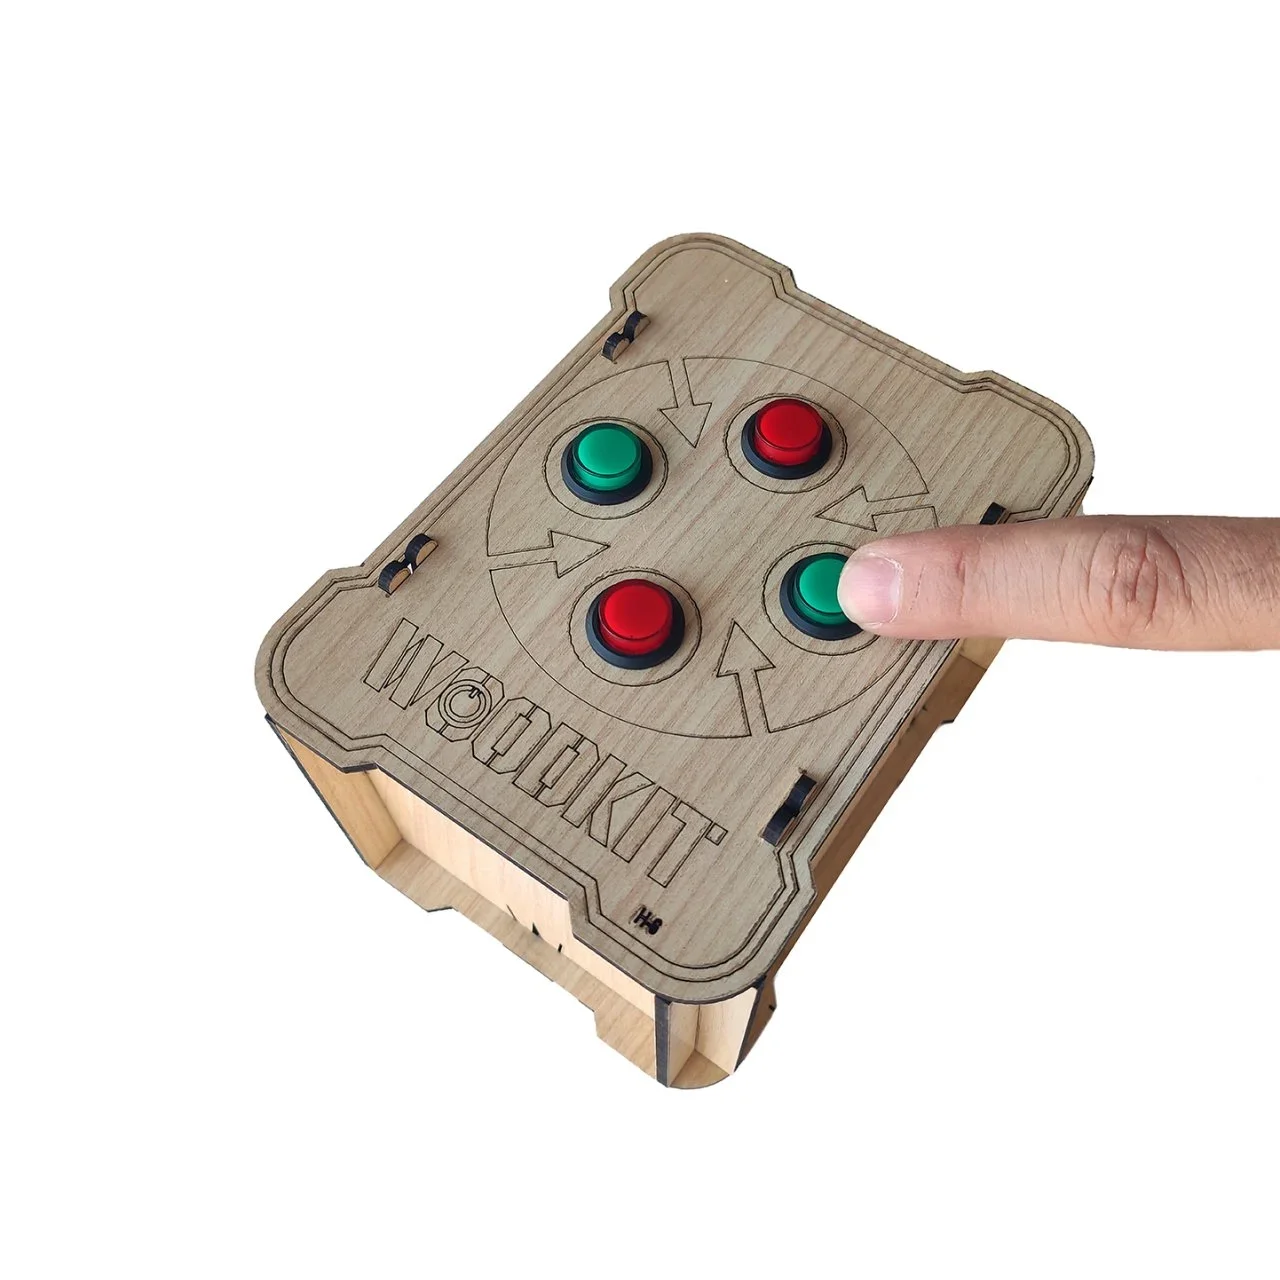 Wood-Kit Robotik Kodlama kiti - Renkli Hafıza Oyunu